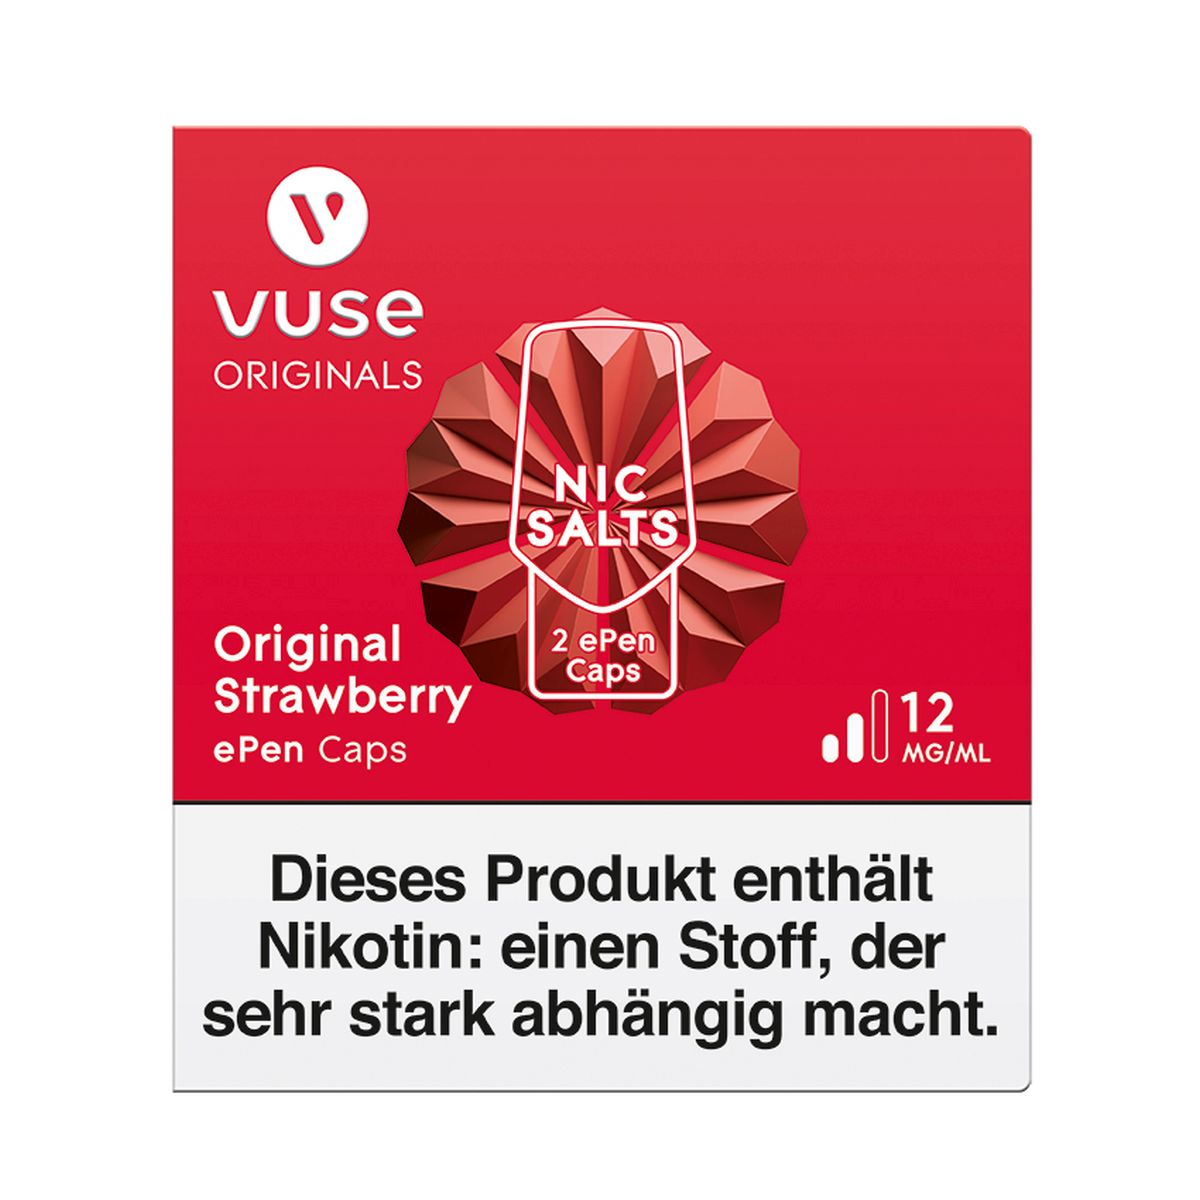 Vuse Vuse ePen Caps Original Strawberry Nic Salts 12mg Nikotin 2ml bei www.Tabakring.de kaufen